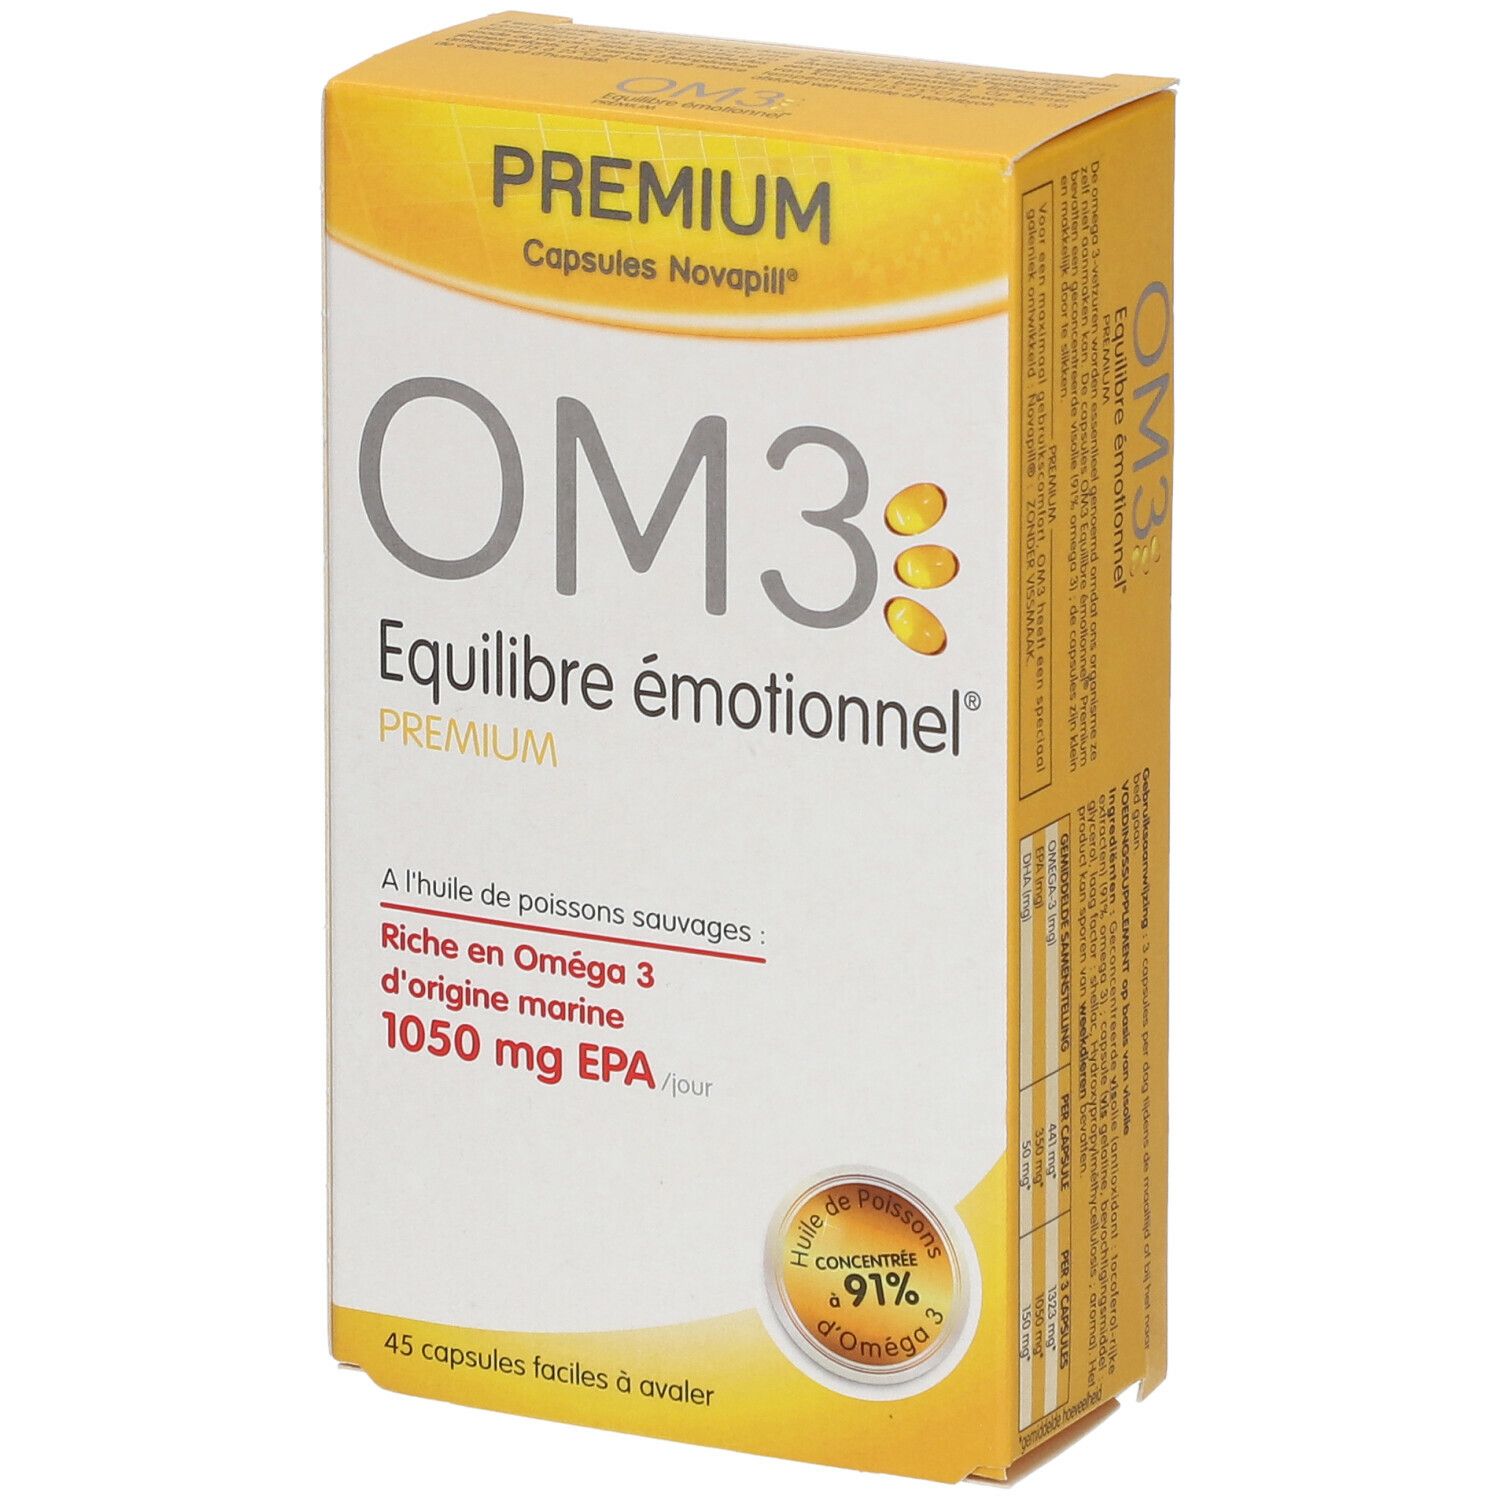 Premium Novapill® OM3 Equilibre émotionnel®